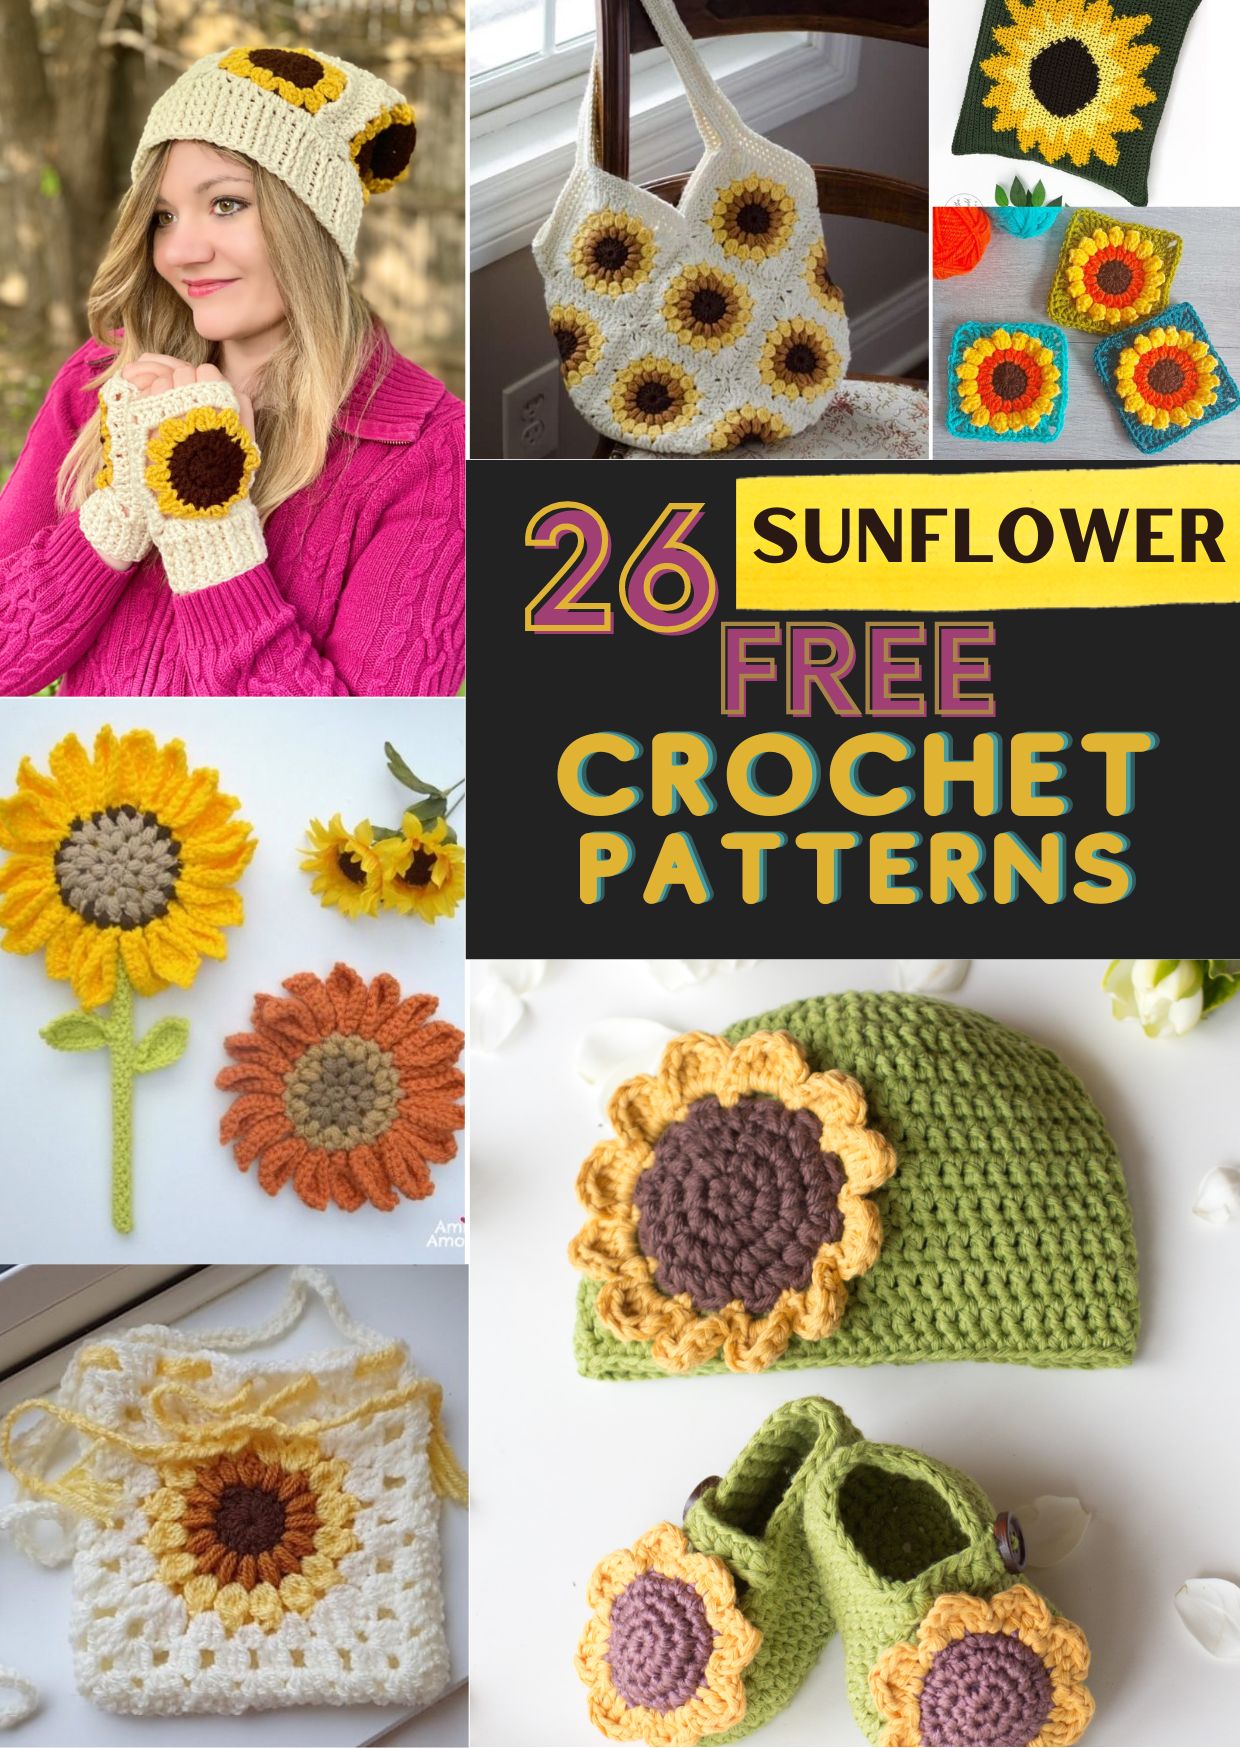 Cheerful Crochet Sunflower in Smiling Red Pot - Buy ladies bag